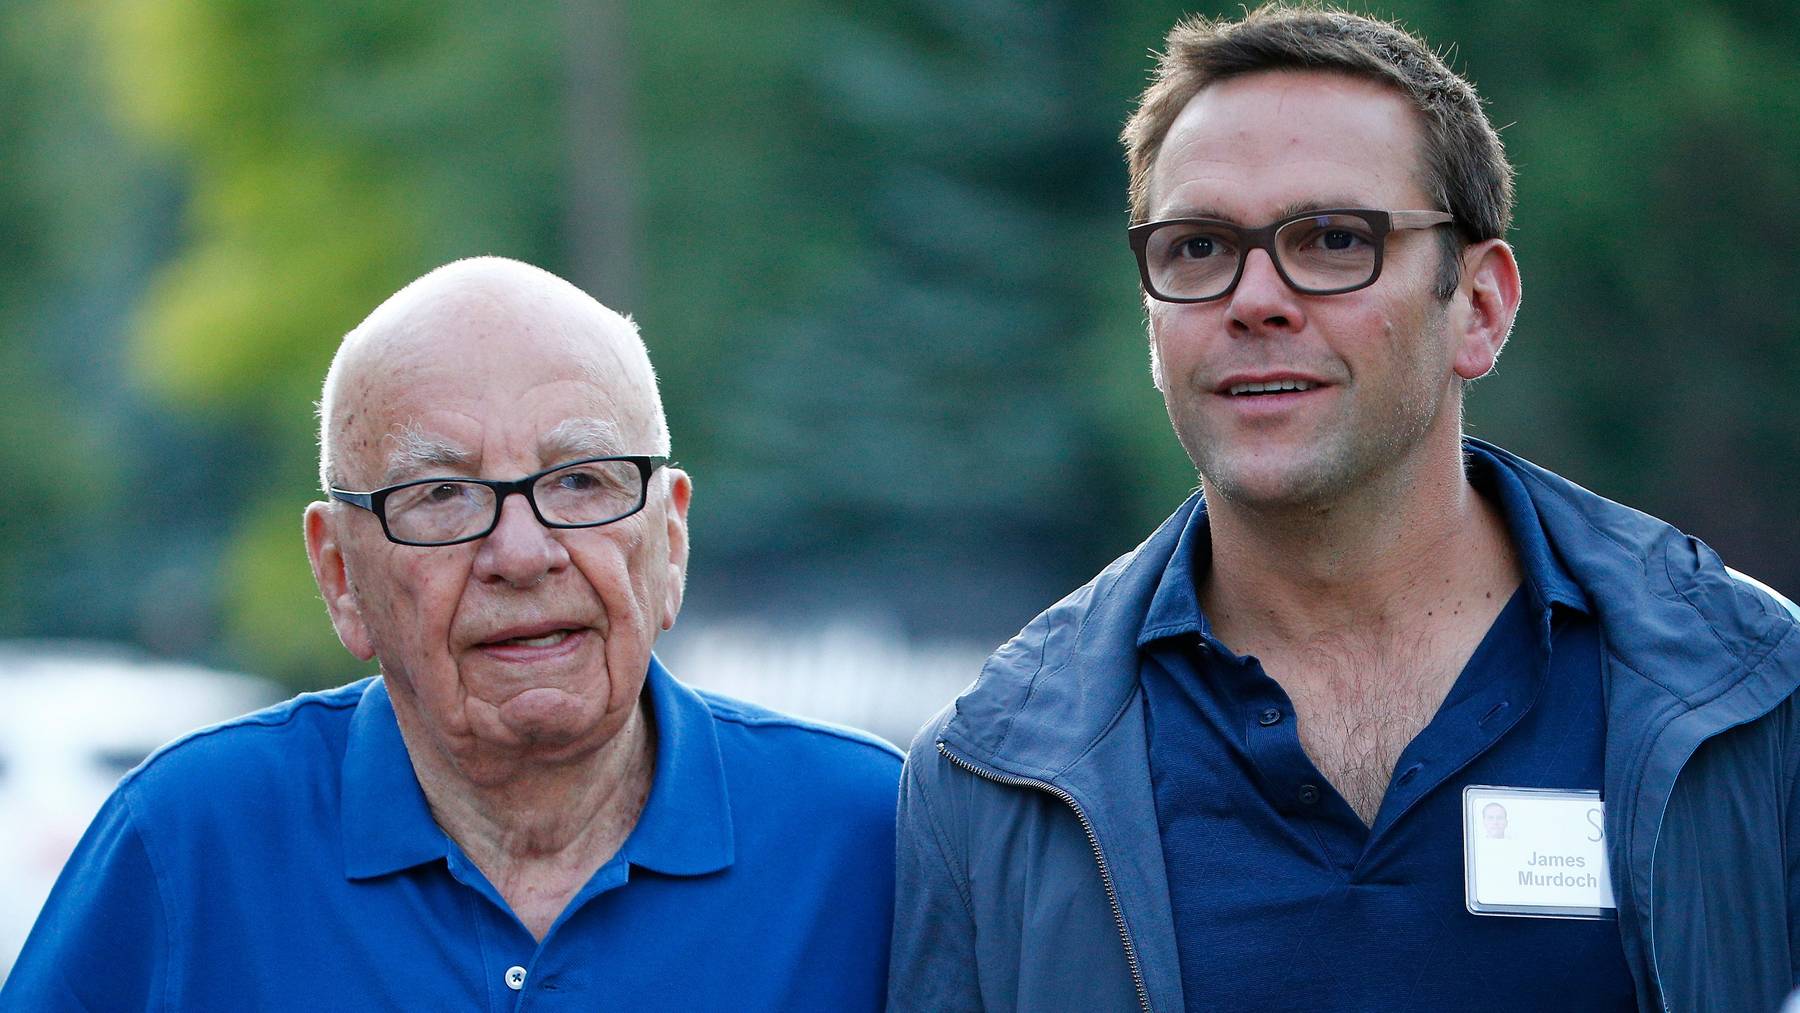 Investor mit berühmtem Namen: James Murdoch (rechts) ist der Sohn von US-Medienmogul Rupert Murdoch (links).